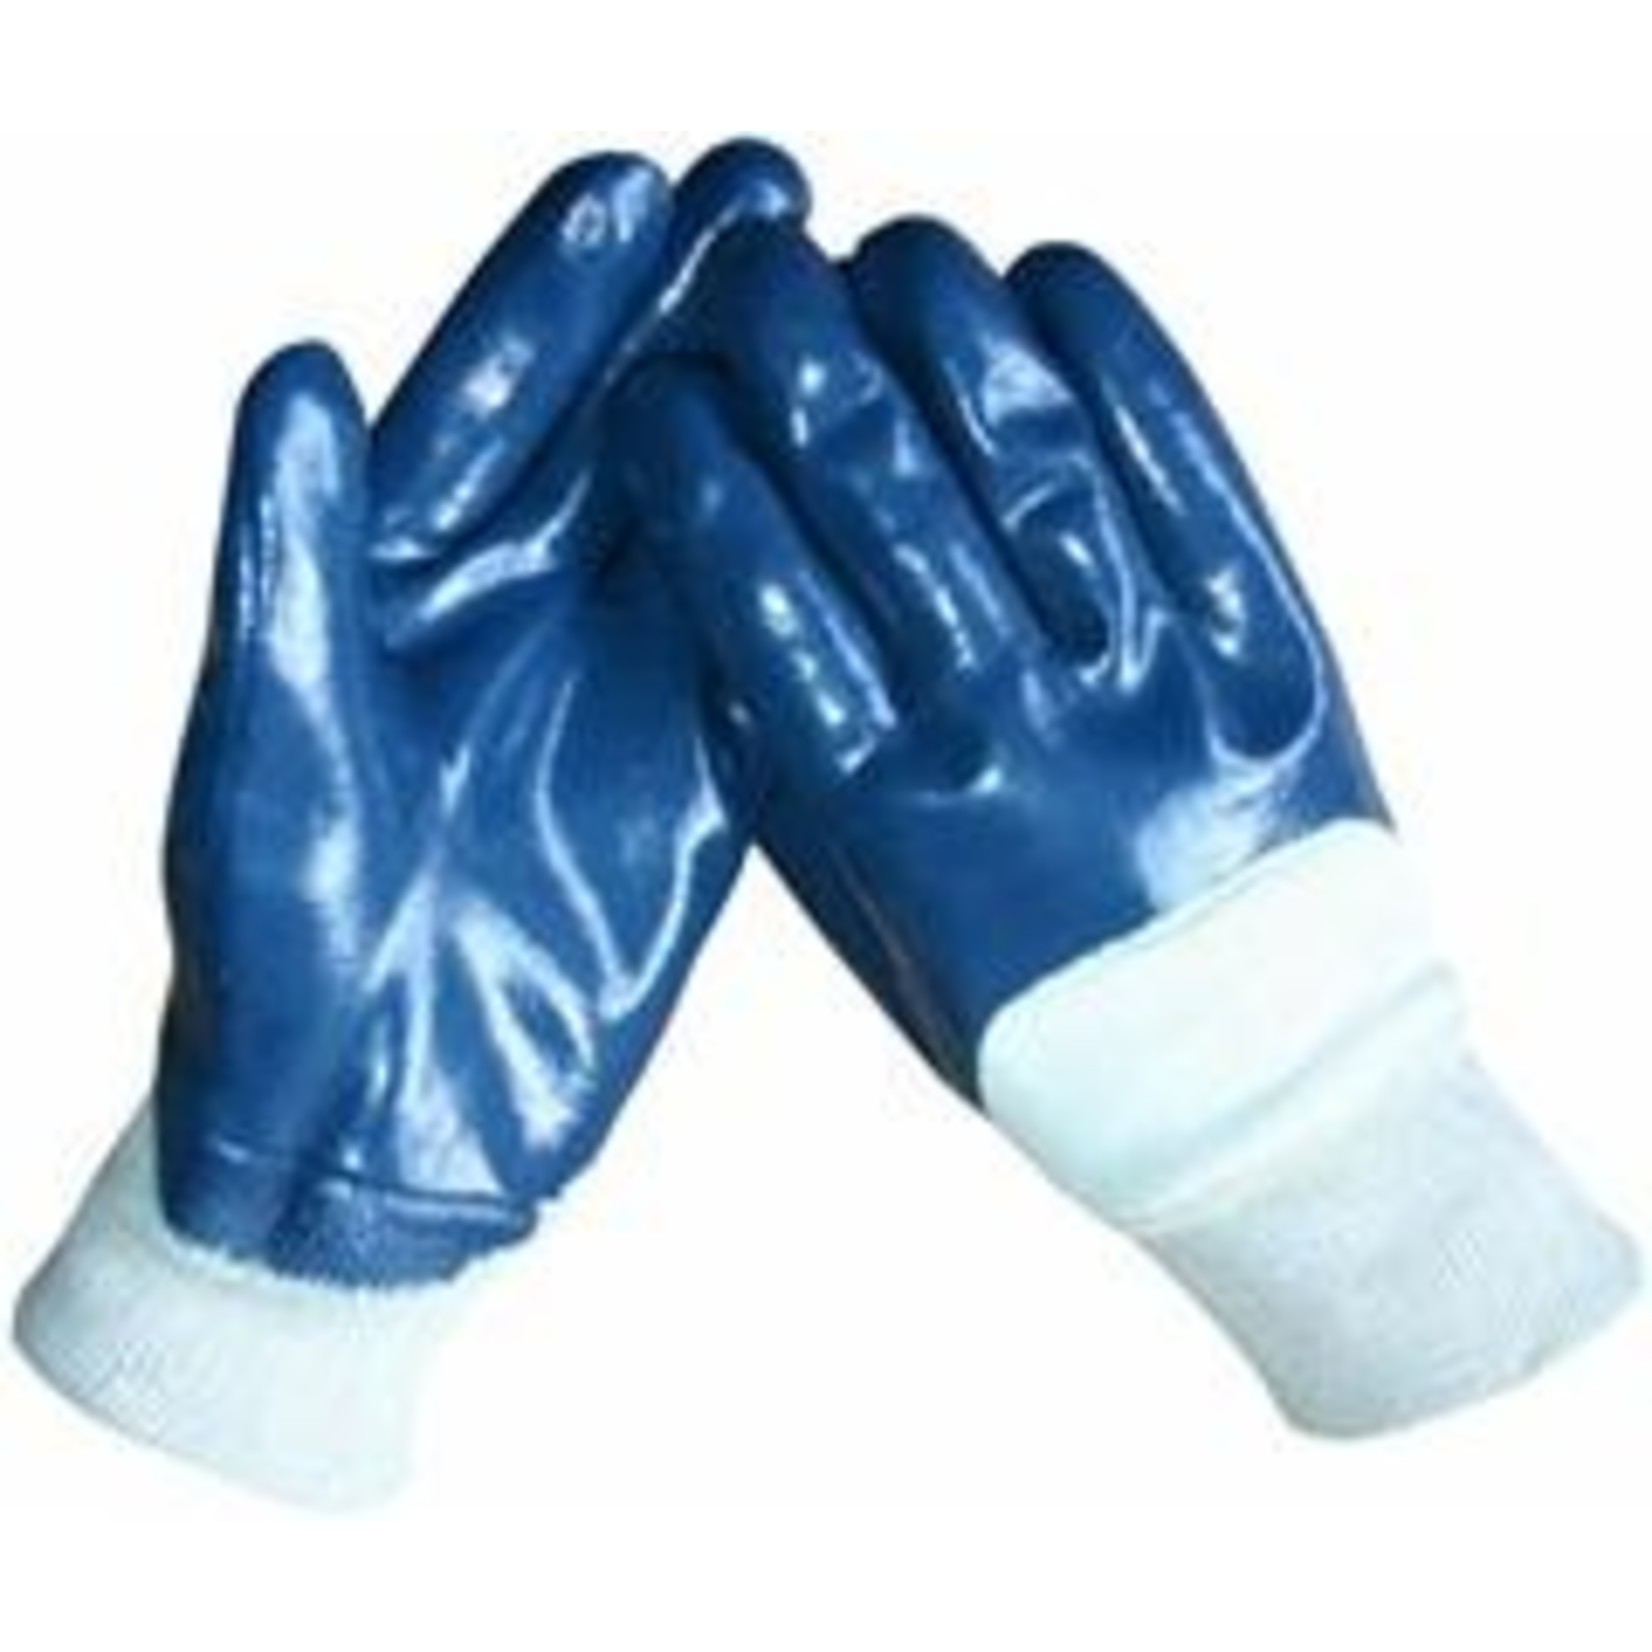 Handschoen blauw NBR tricot boord